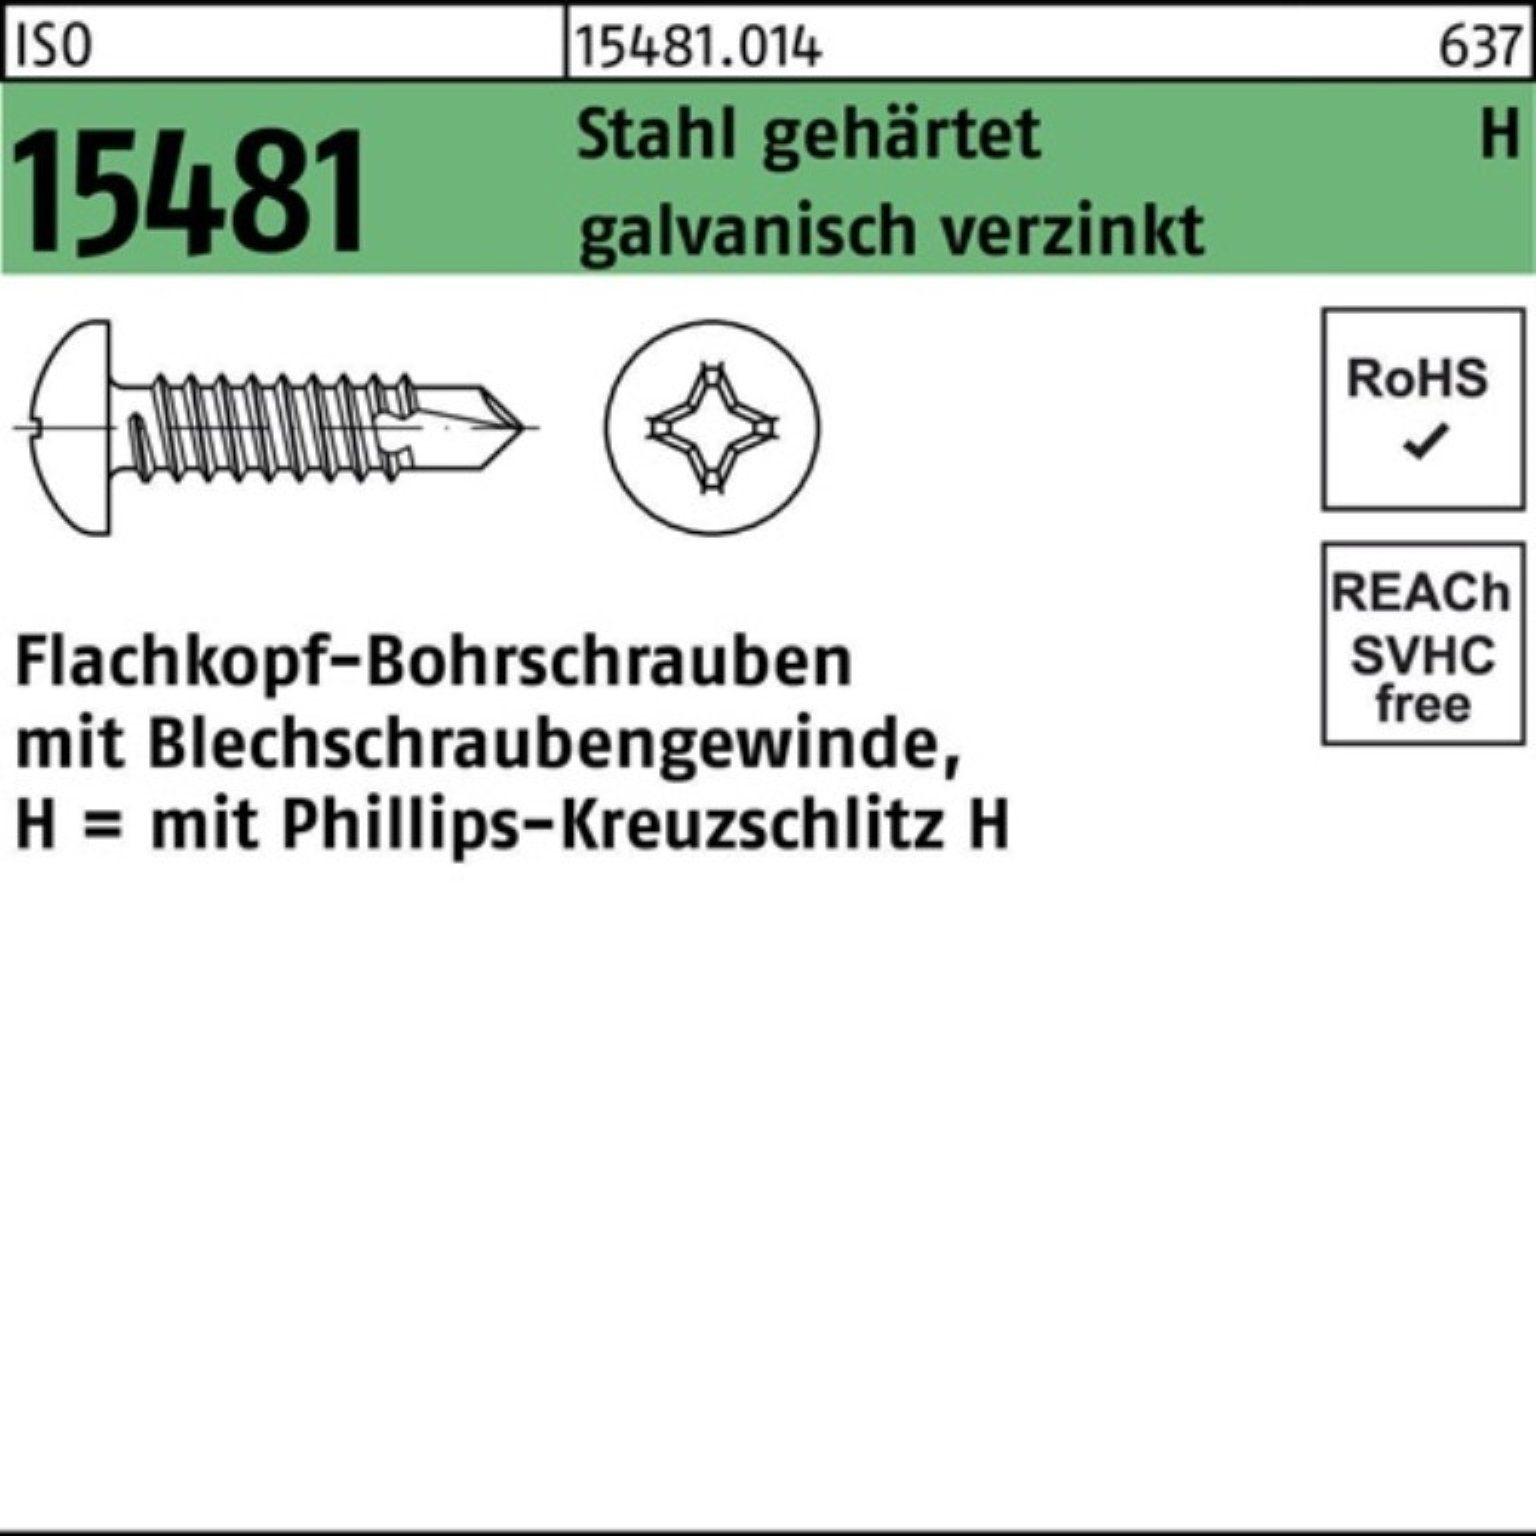 ST gehärtet ISO 250er Bohrschraube Pack FLAKObohrschraube 15481 PH Reyher Stahl 4,8x90-H